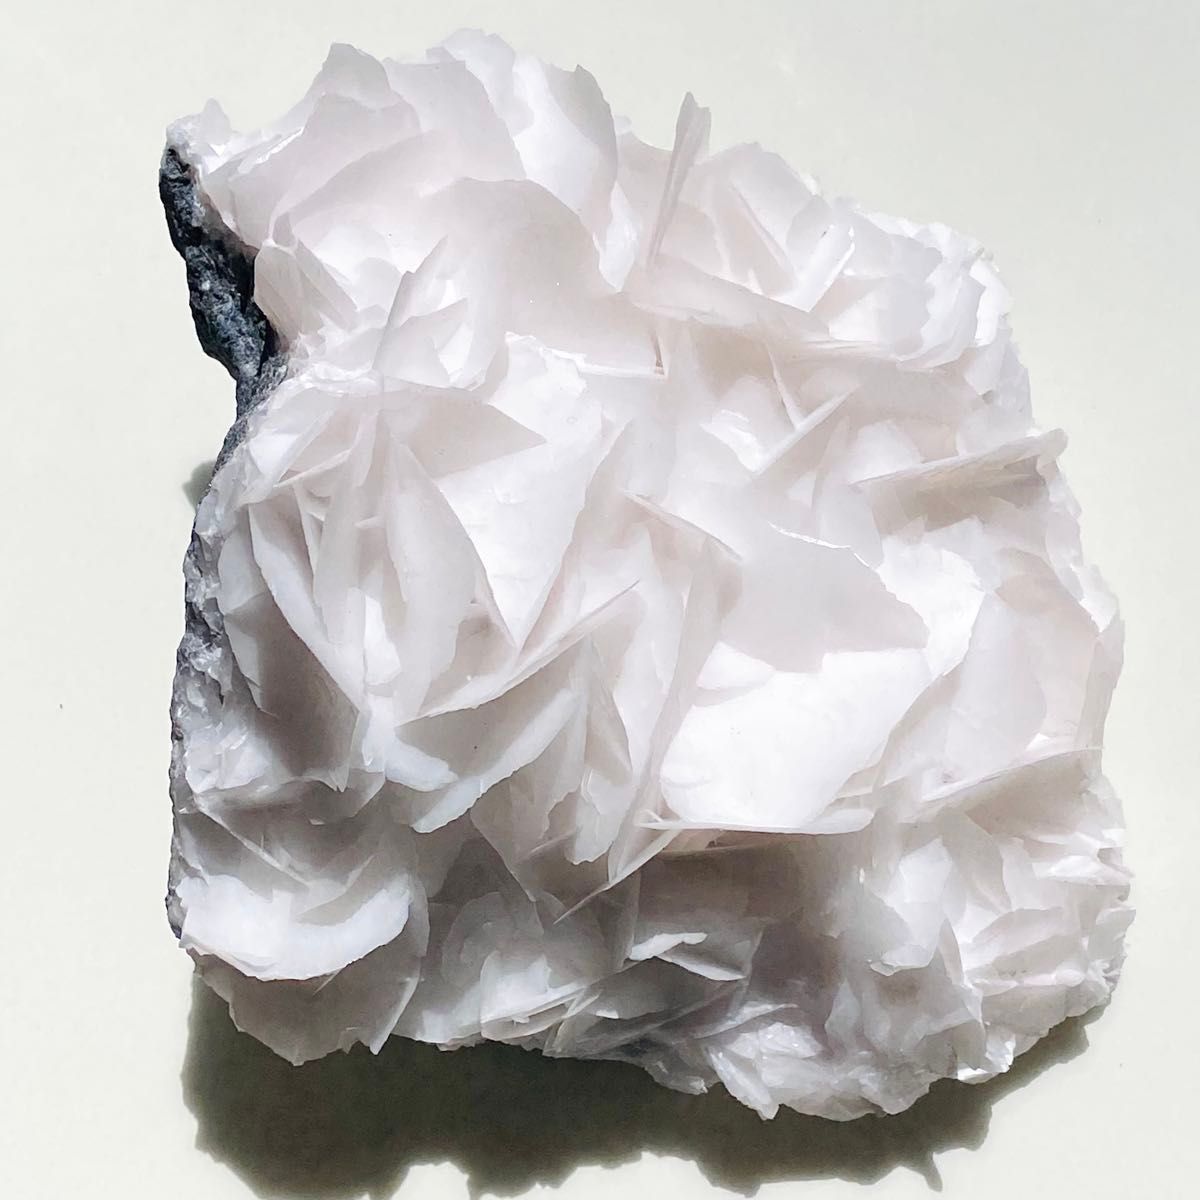 ★SALE【 天然石 美しい ホワイト ローズ カルサイト 原石 約654g 】鉱物 フラワー カルサイト